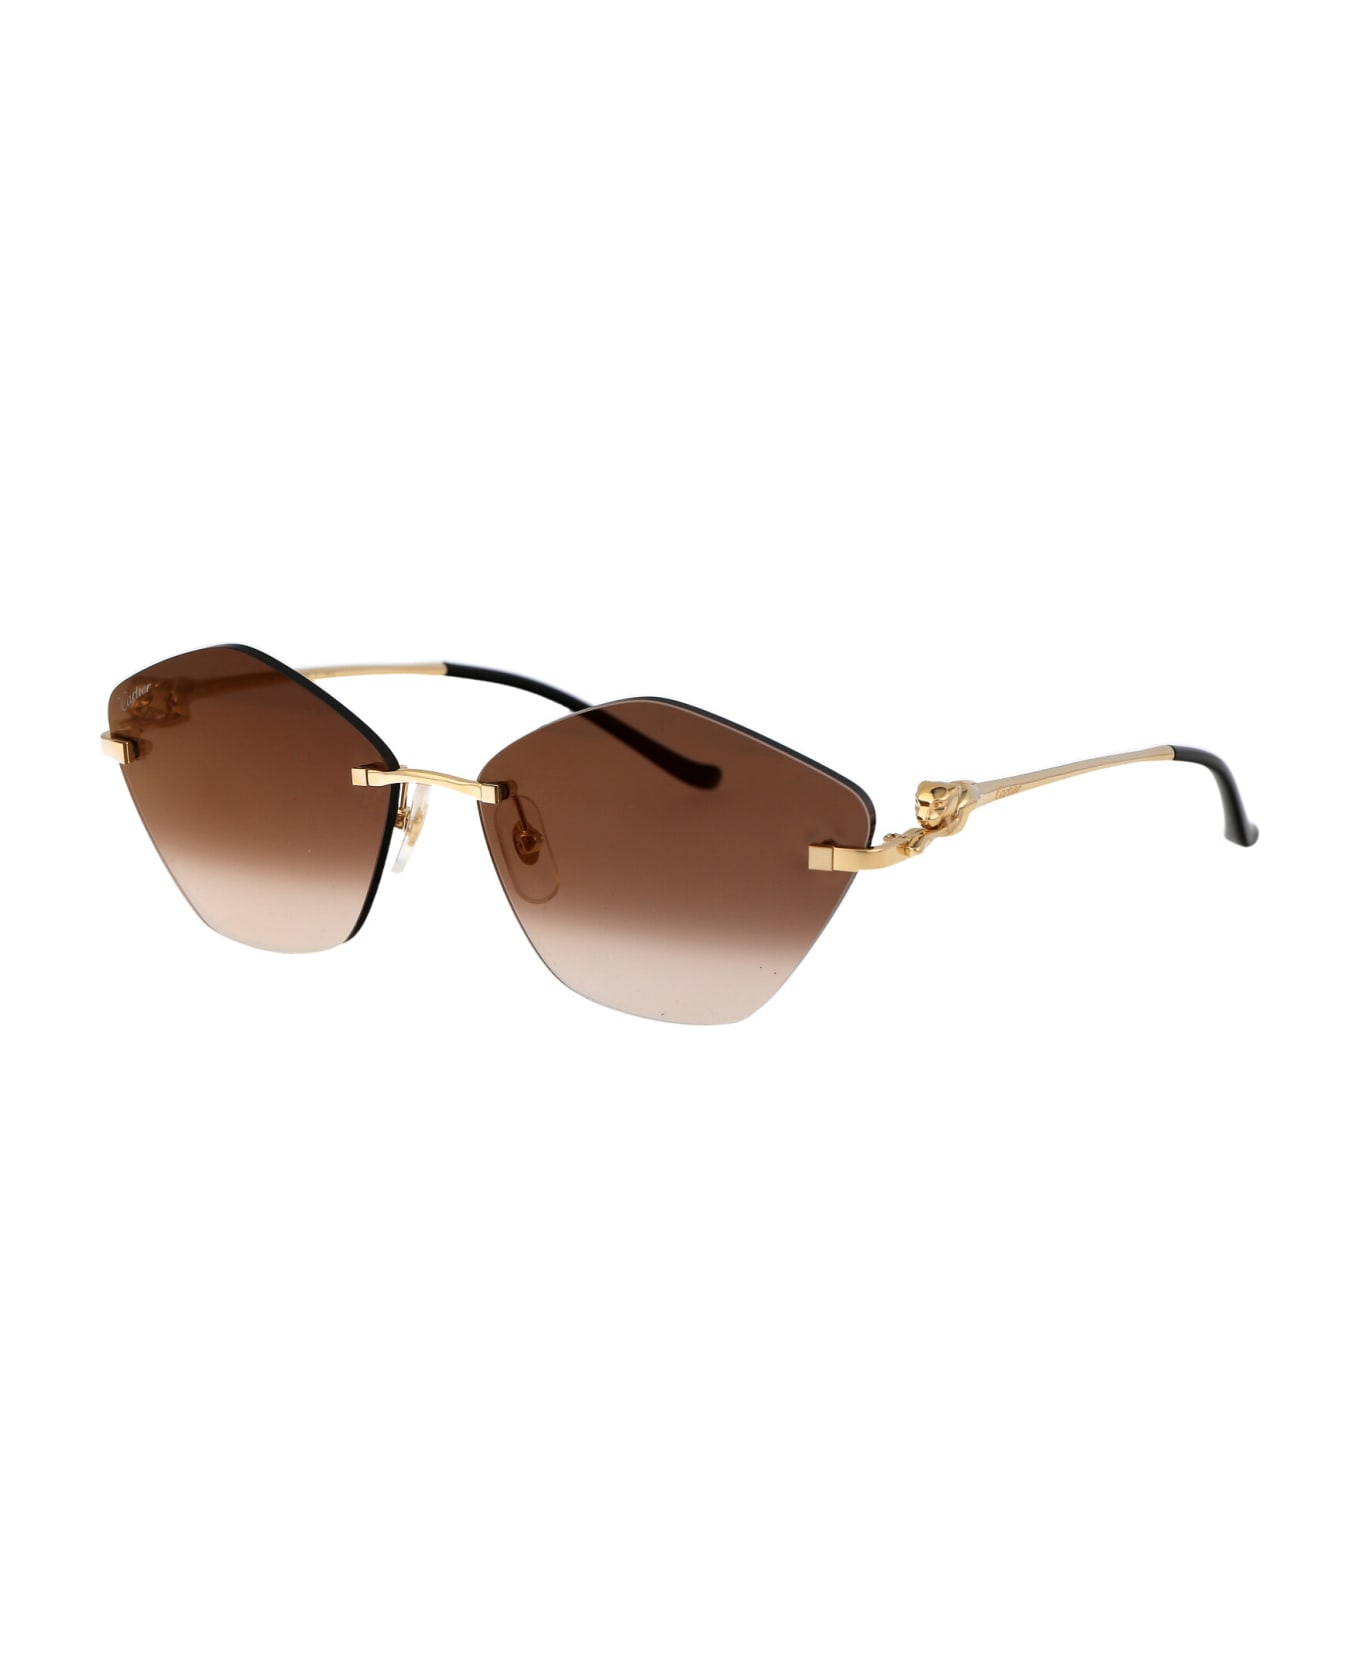 Cartier Eyewear Ct0429s Sunglasses - 002 GOLD GOLD BROWN